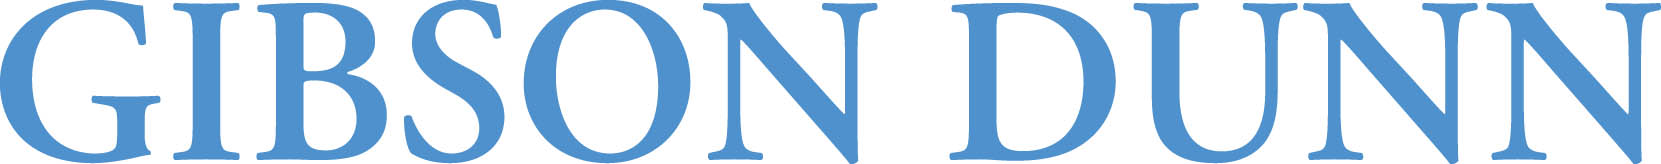 2021 Logo